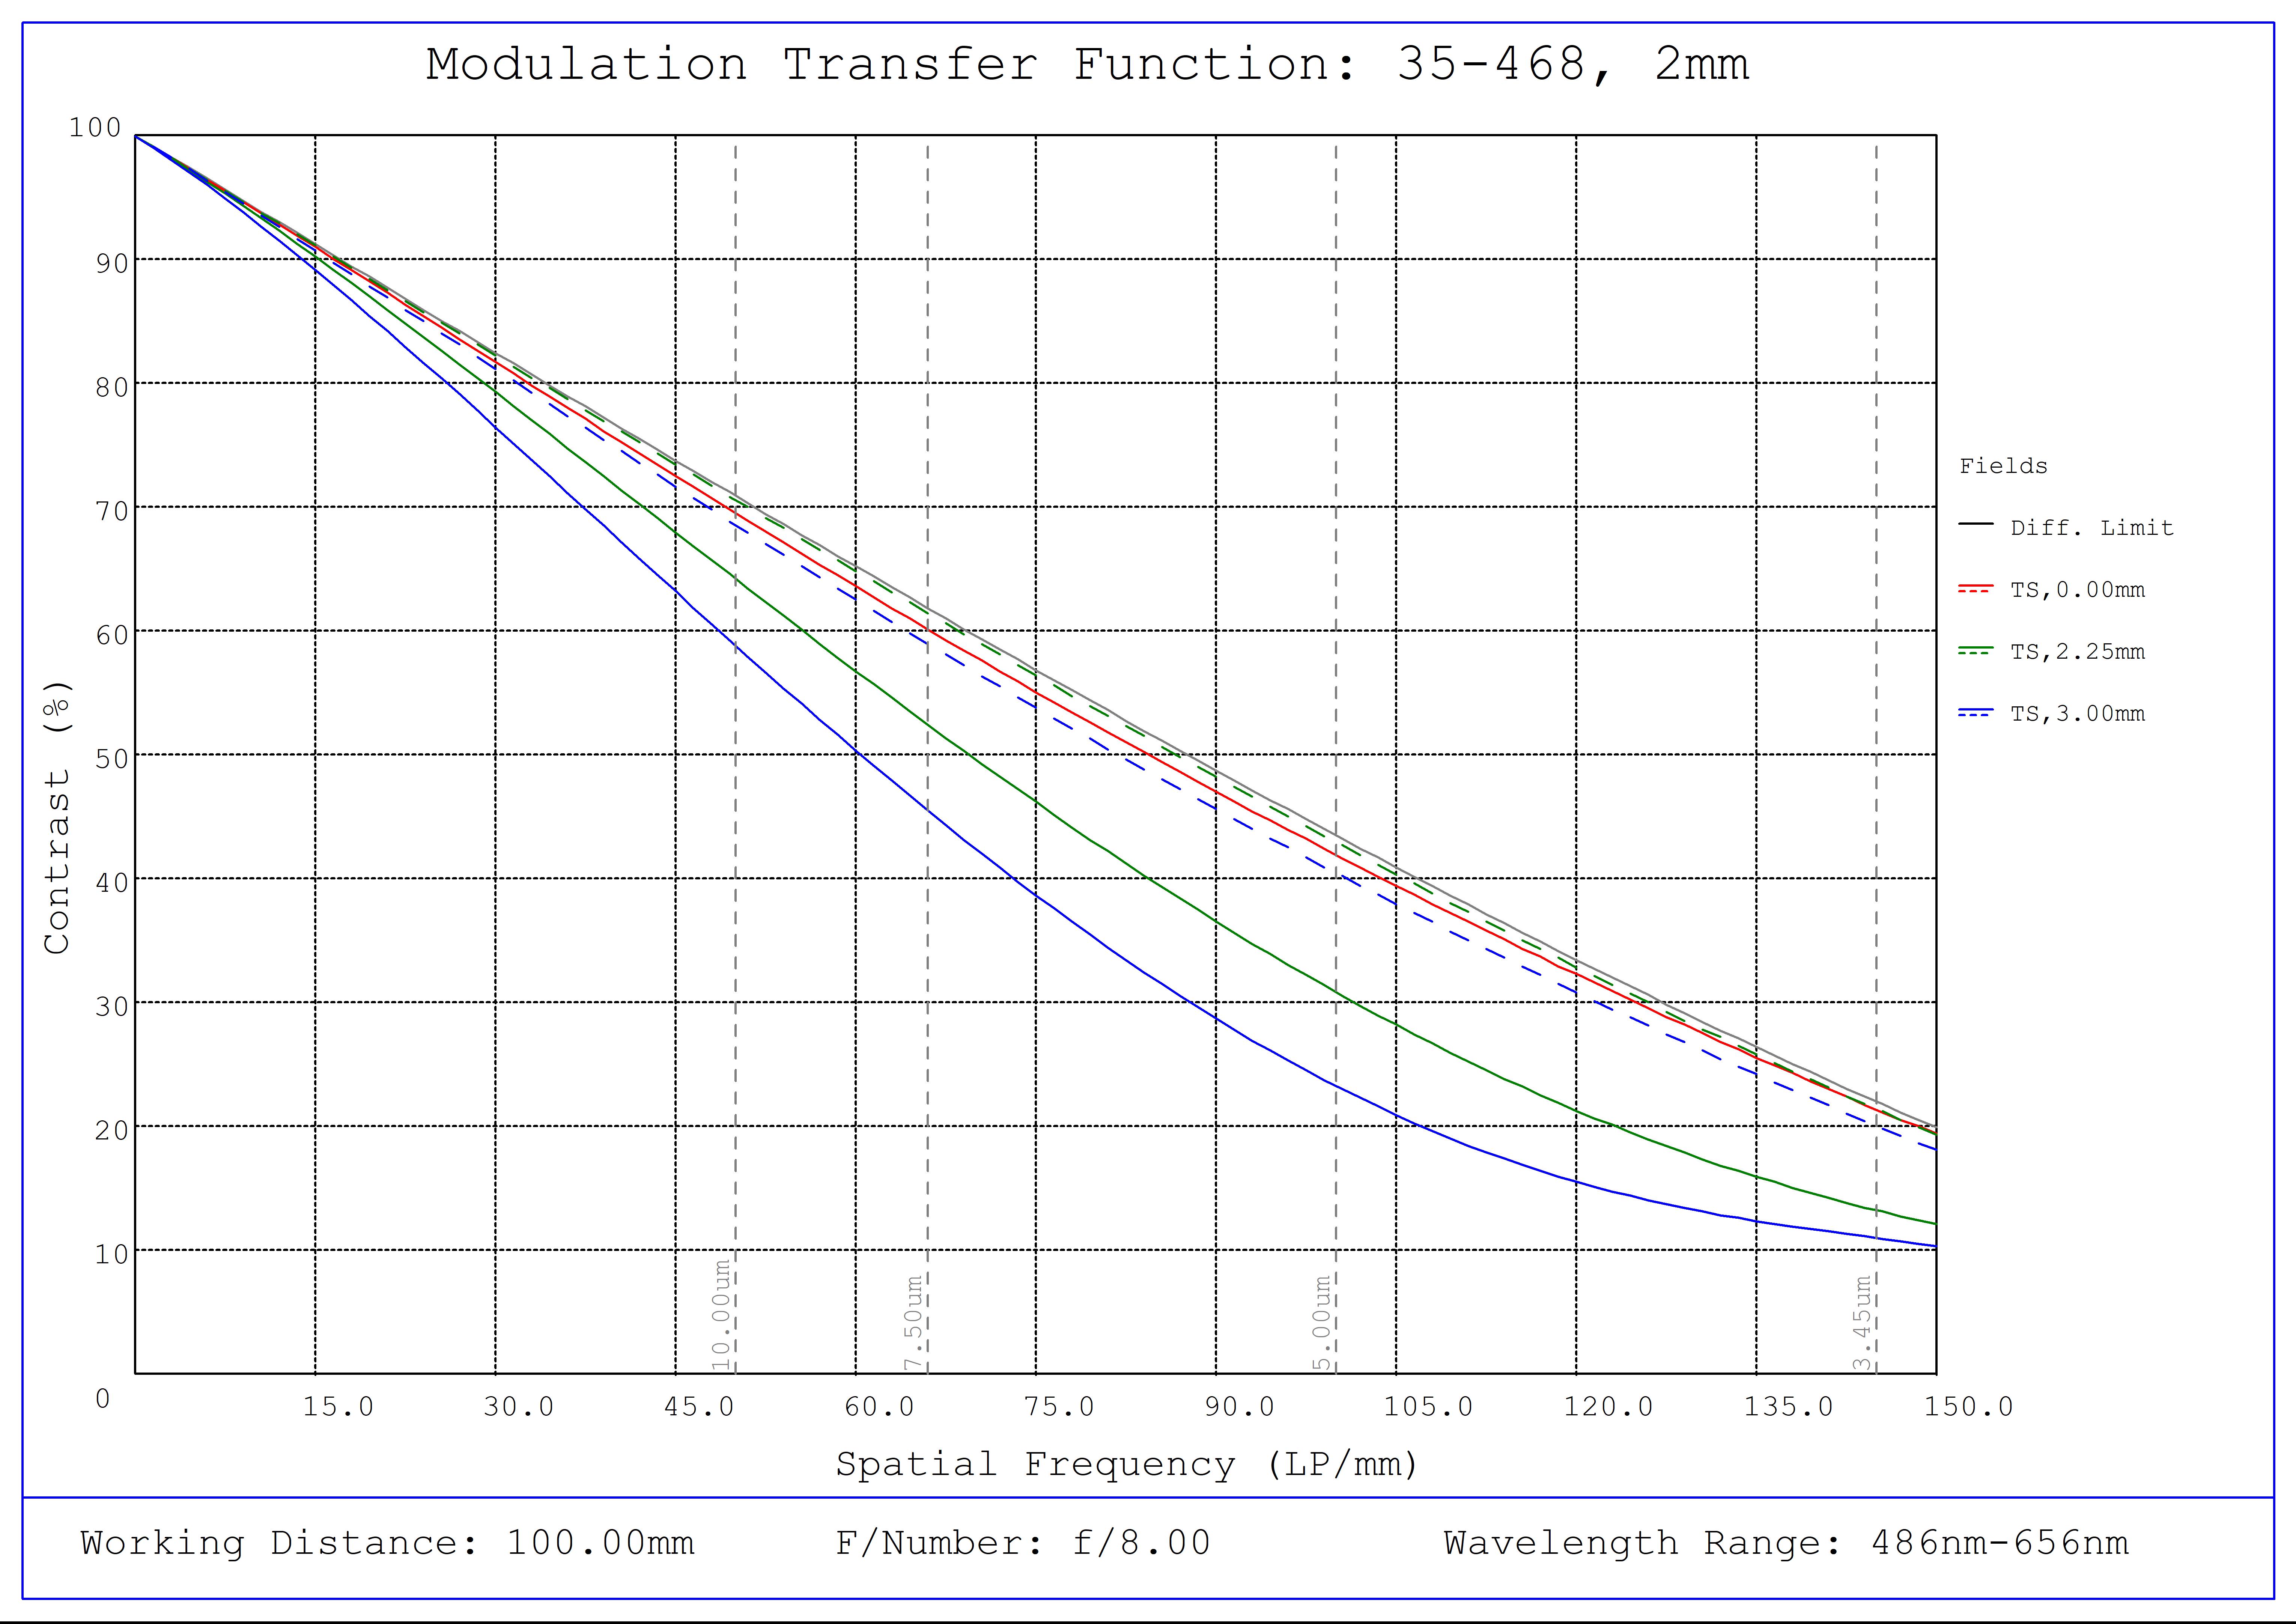 #35-468, 2mm FL f/8 IR-Cut, Blue Series M12 Lens, Modulated Transfer Function (MTF) Plot, 100mm Working Distance, f8